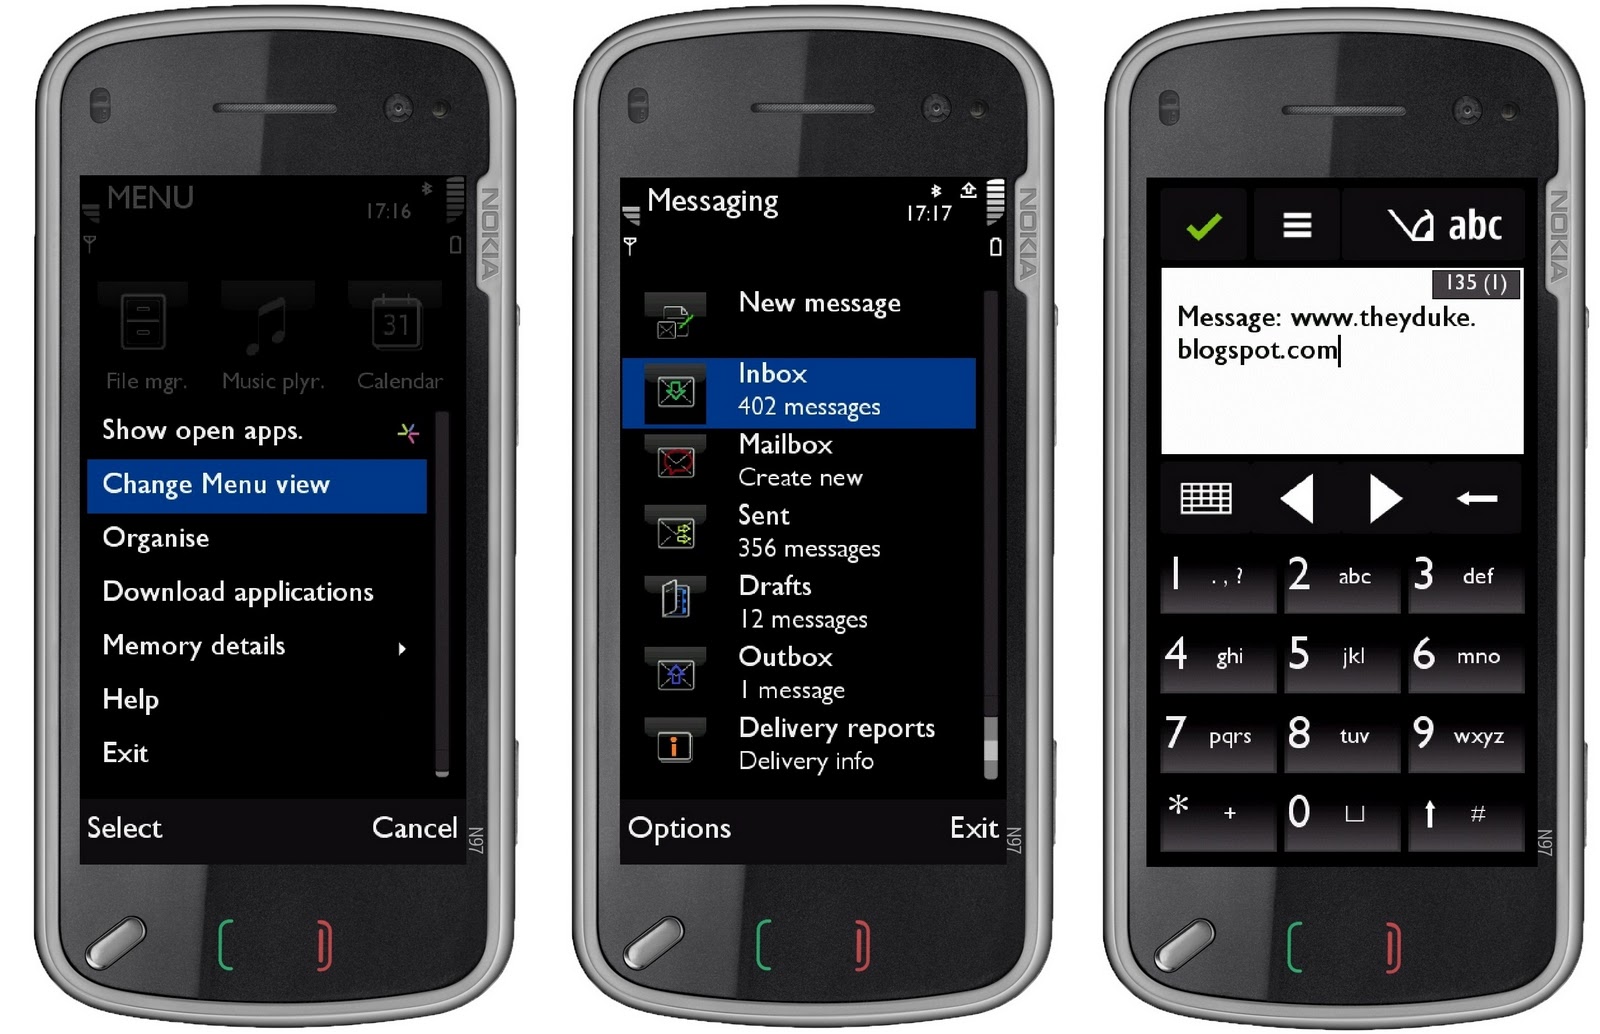 Nokia 5233 Themes Games Download Zedge